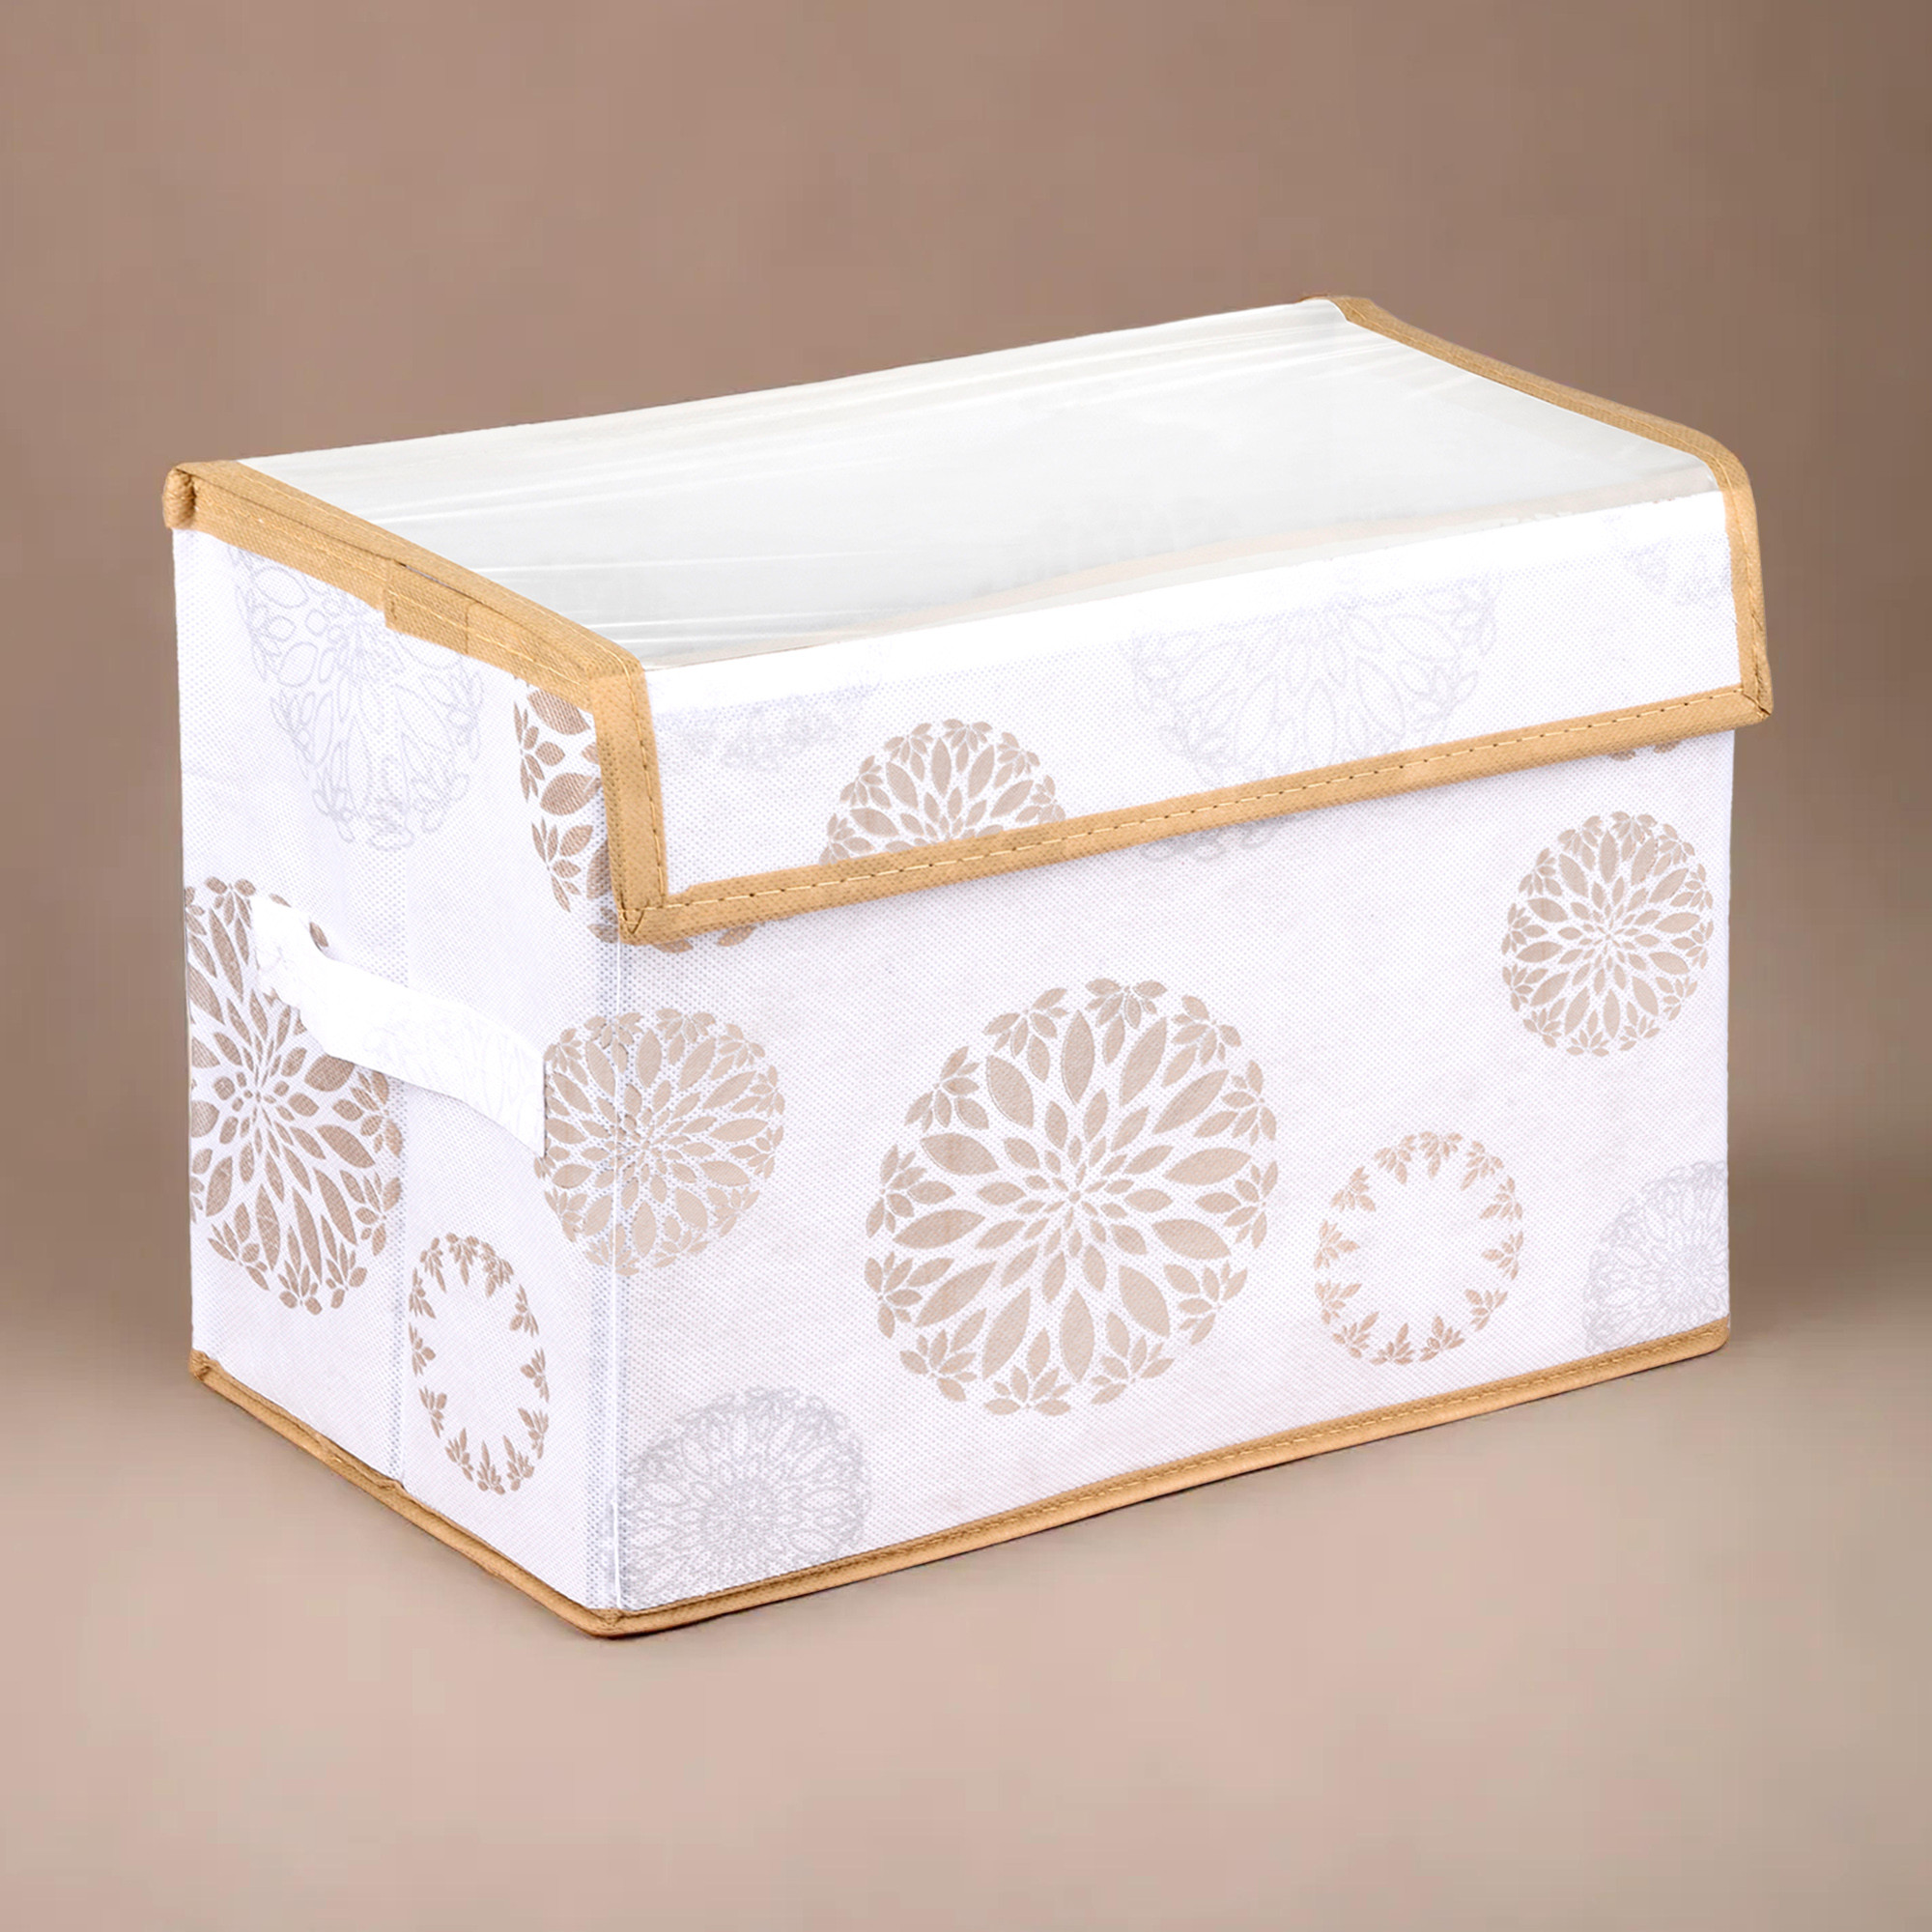 Kuber Industries Drawer Storage Box | Foldable Clothes Organizer | Transparent Dhakkan with Handle | Velcro Drawer Organizer | Storage Bin for Books-Toys | Gola-Print | Large | White